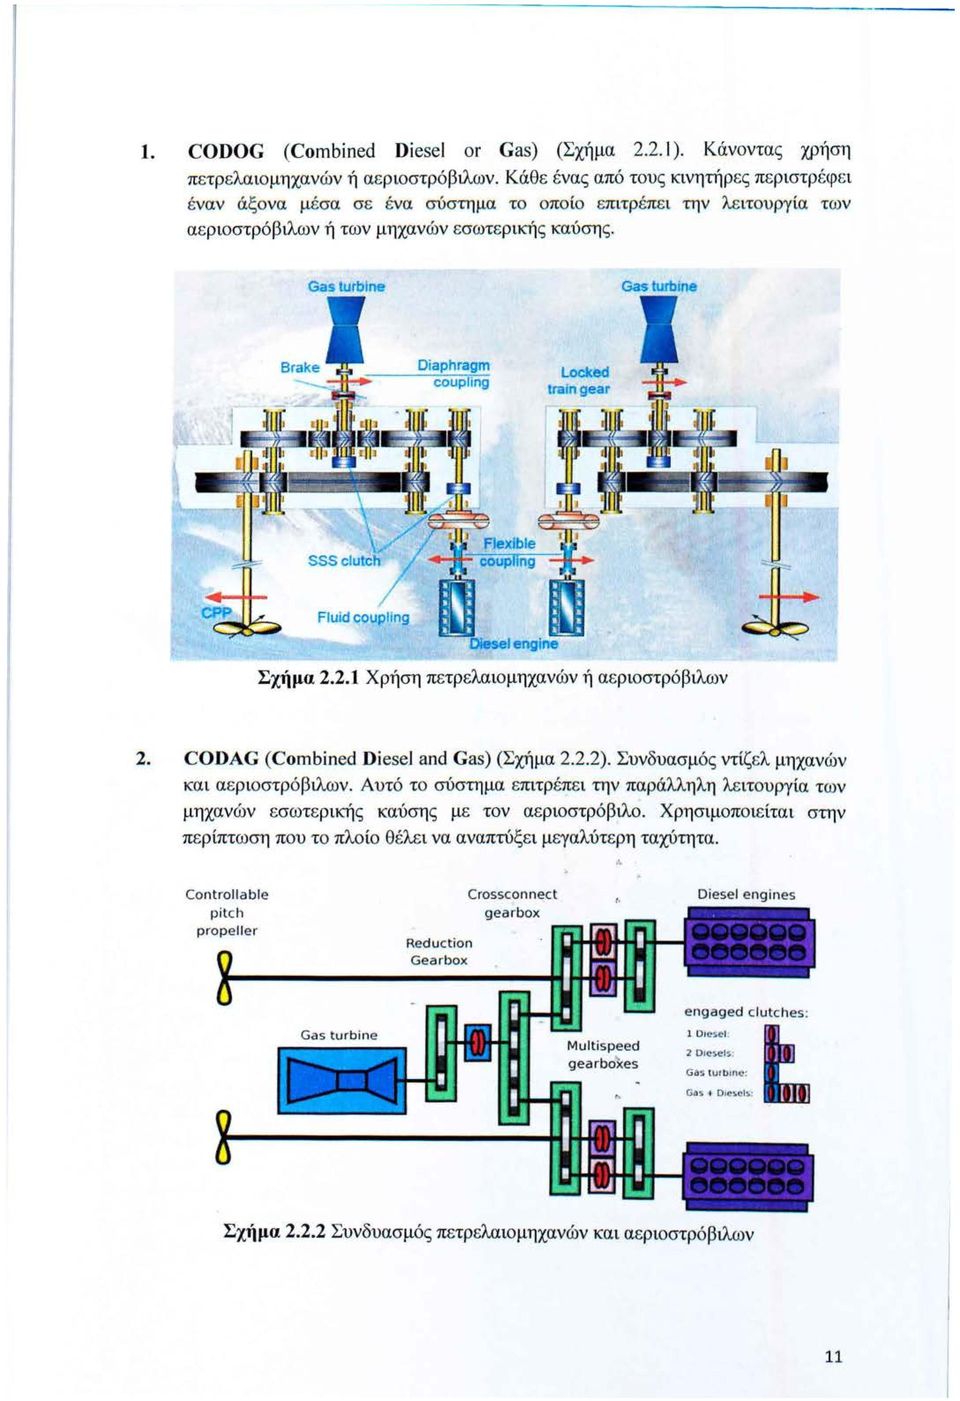 Gasturbine Diaphragm coupling locked traln gear Σχήμα 2.2.1 Χρήση πετρελαιομηχανών ή αεριοστρόβιλων 2. CODAG (Combined Dίesel and Gas) (Σχήμα 2.2.2). Συνδυασμός ντίζελ μηχανών και α ε ριοστρόβιλων.